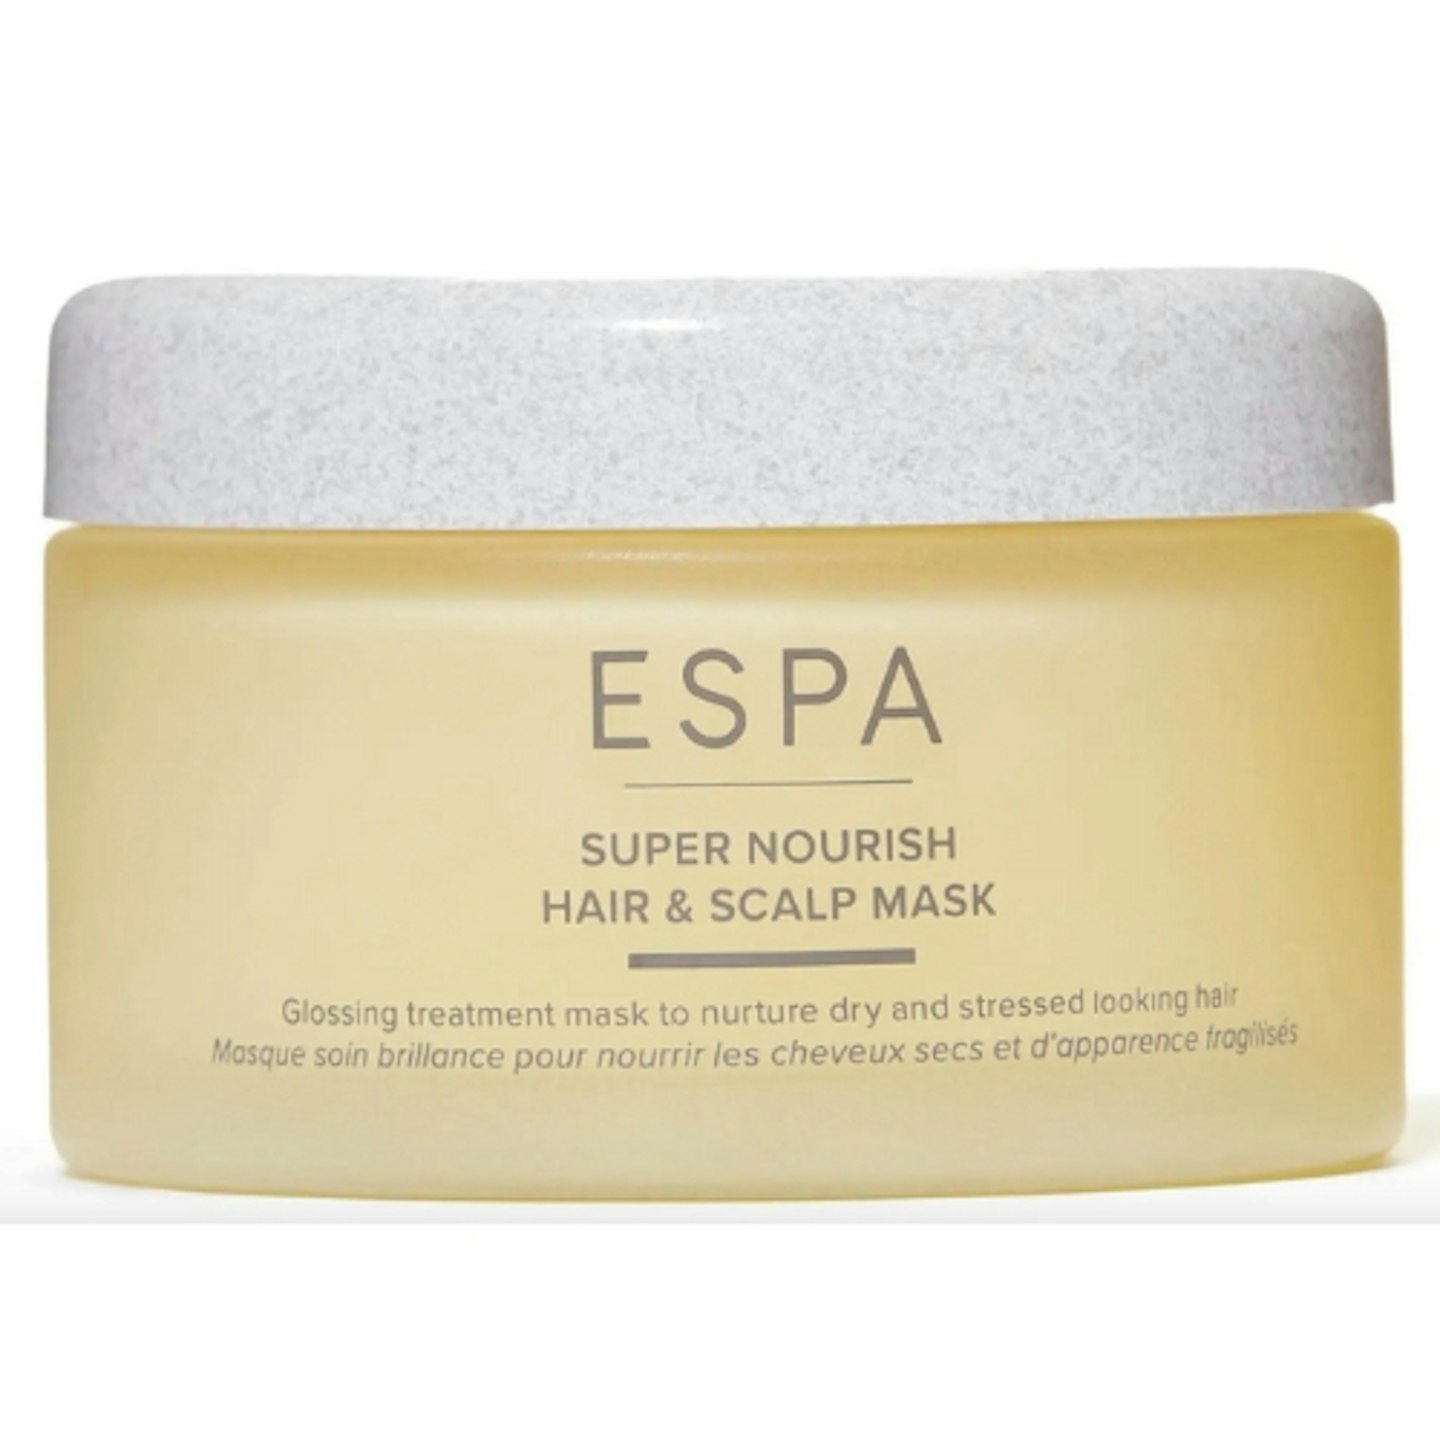 ESPA Super Nourish Hair & Scalp Mask 190ml